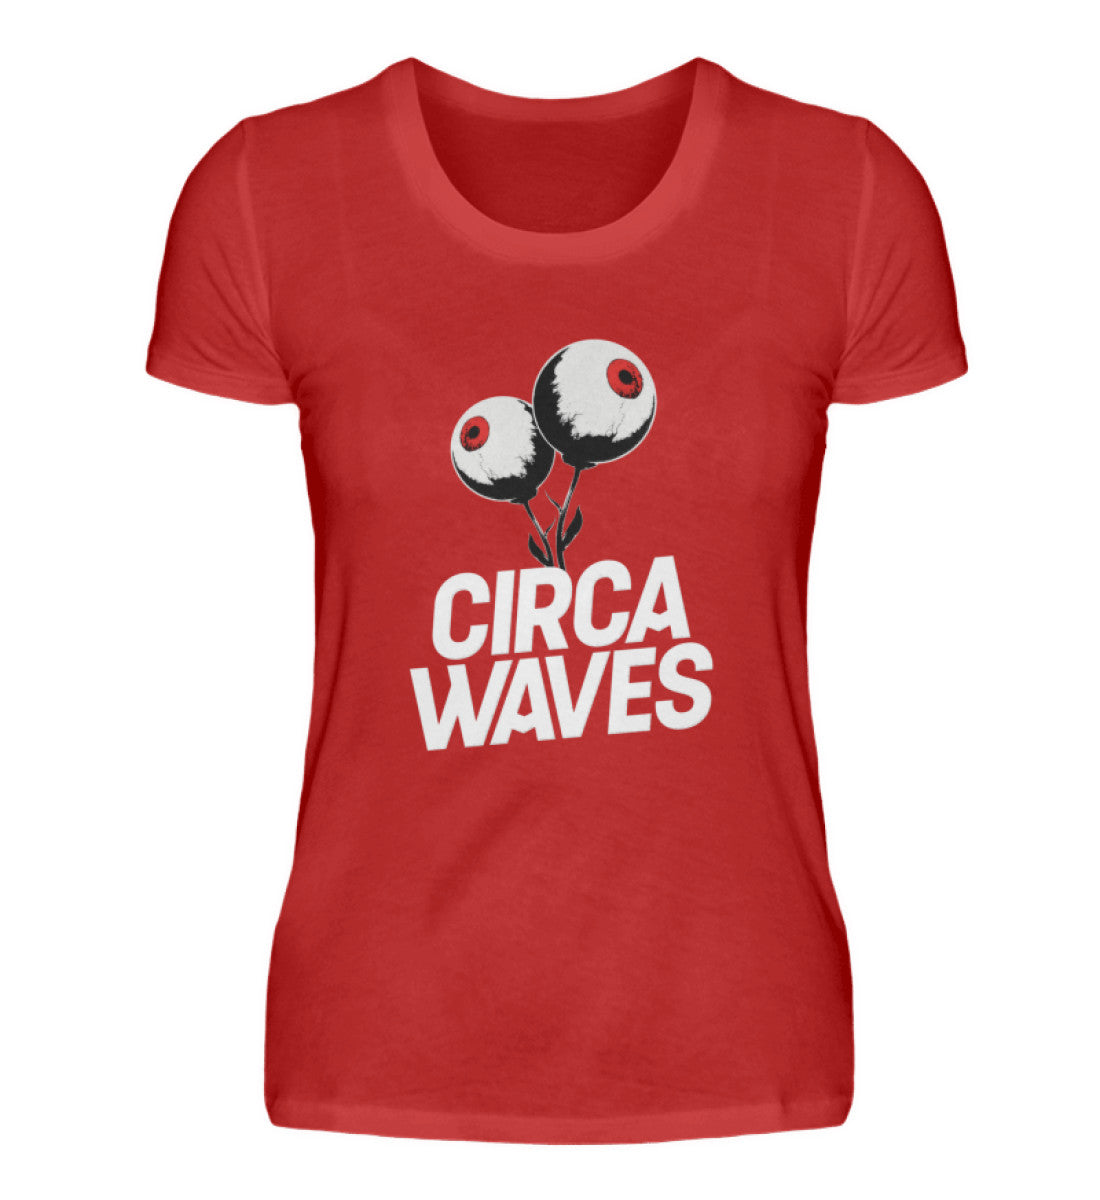 Circa Waves T-Shirt Women